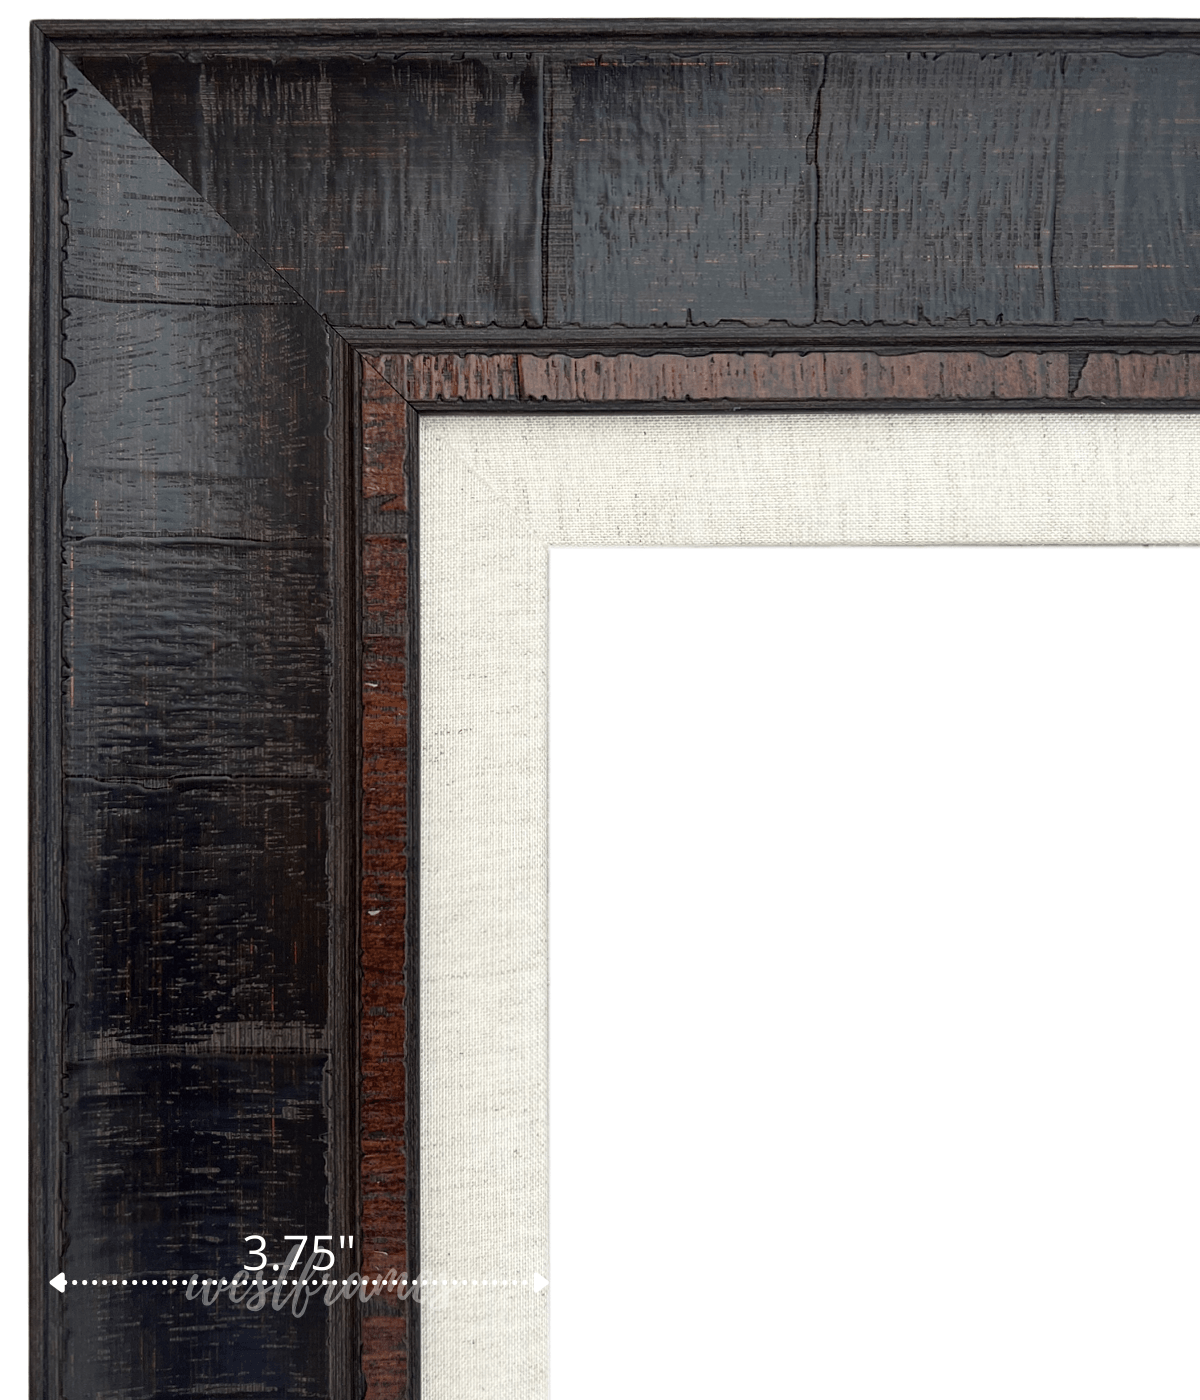 Lodge Rustic Distressed Picture Frame Dark Espresso Walnut with Linen Liner 3.75" - West Frames